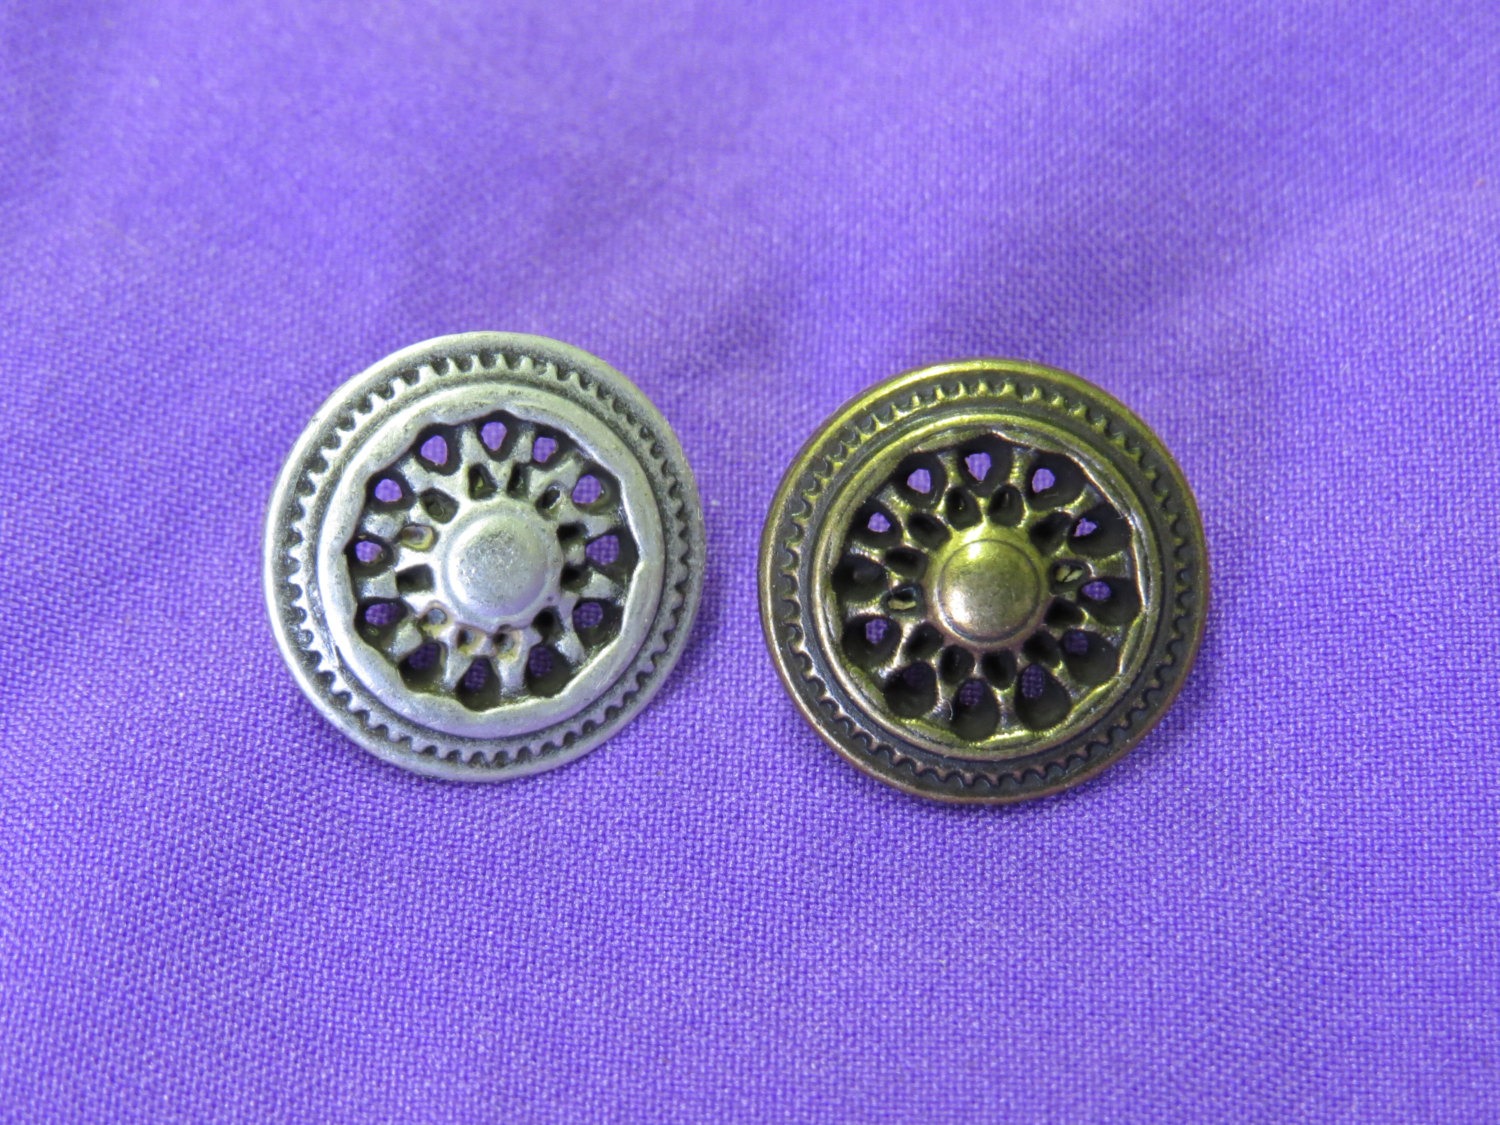 1 Dozen Steampunk Wheel Shaped Vintage Shank Buttons i394 steampunk buy now online